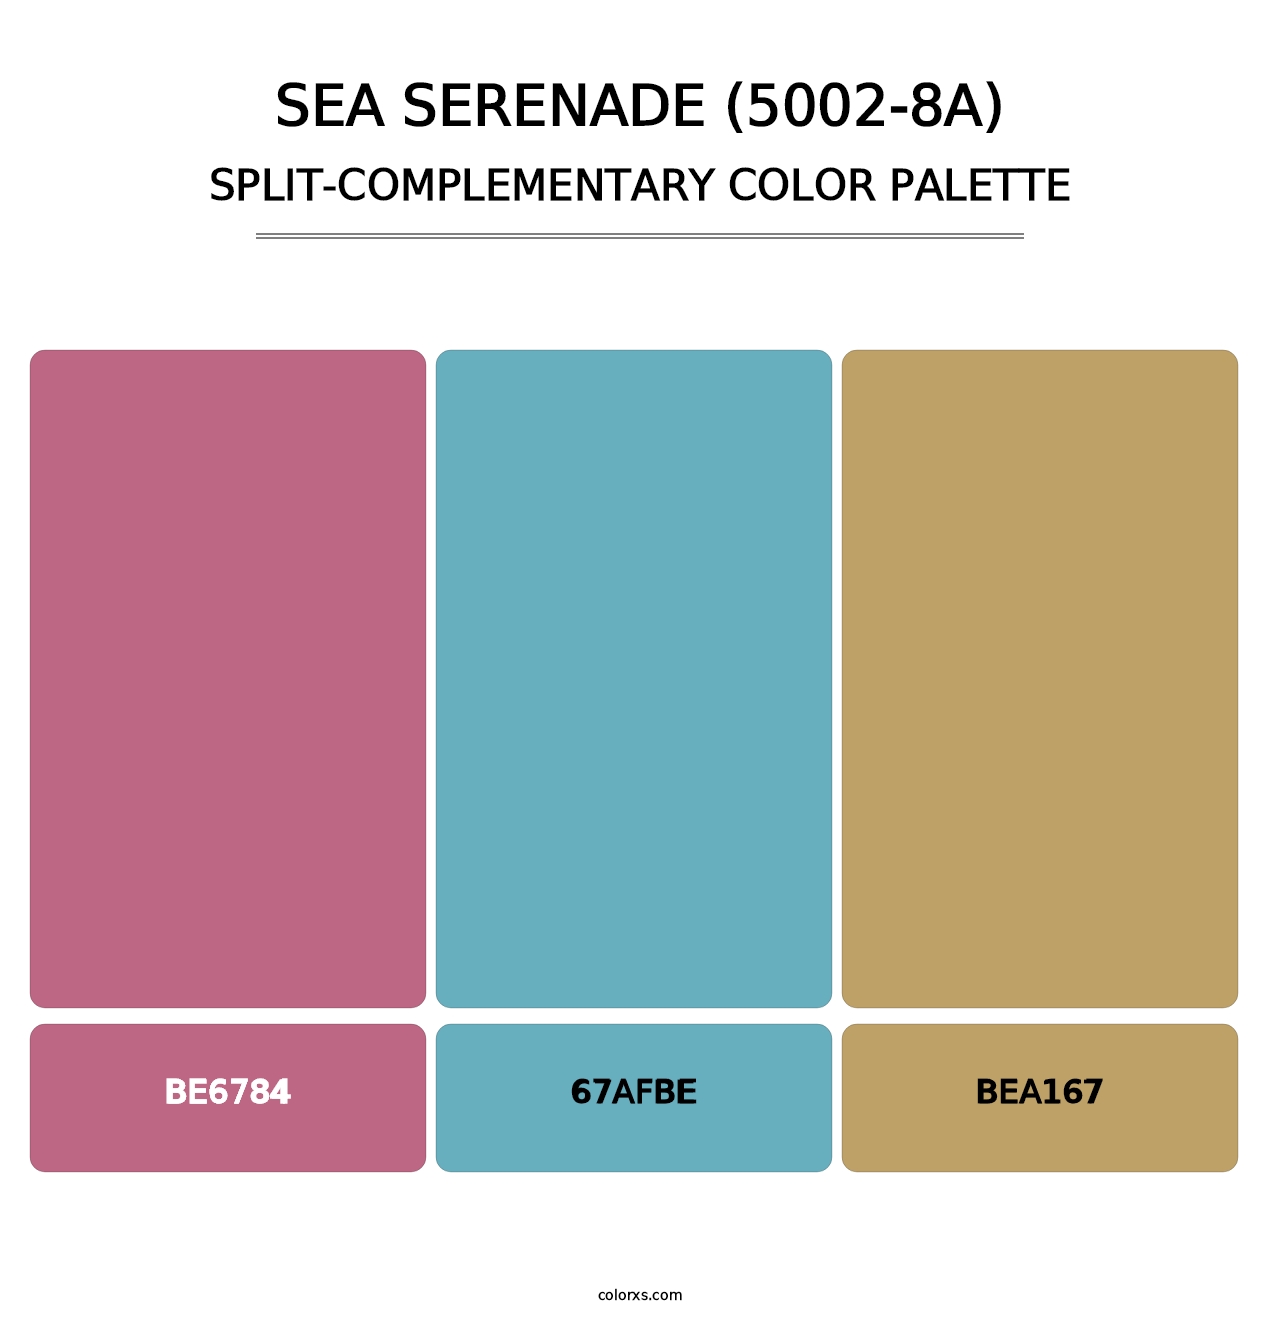 Sea Serenade (5002-8A) - Split-Complementary Color Palette